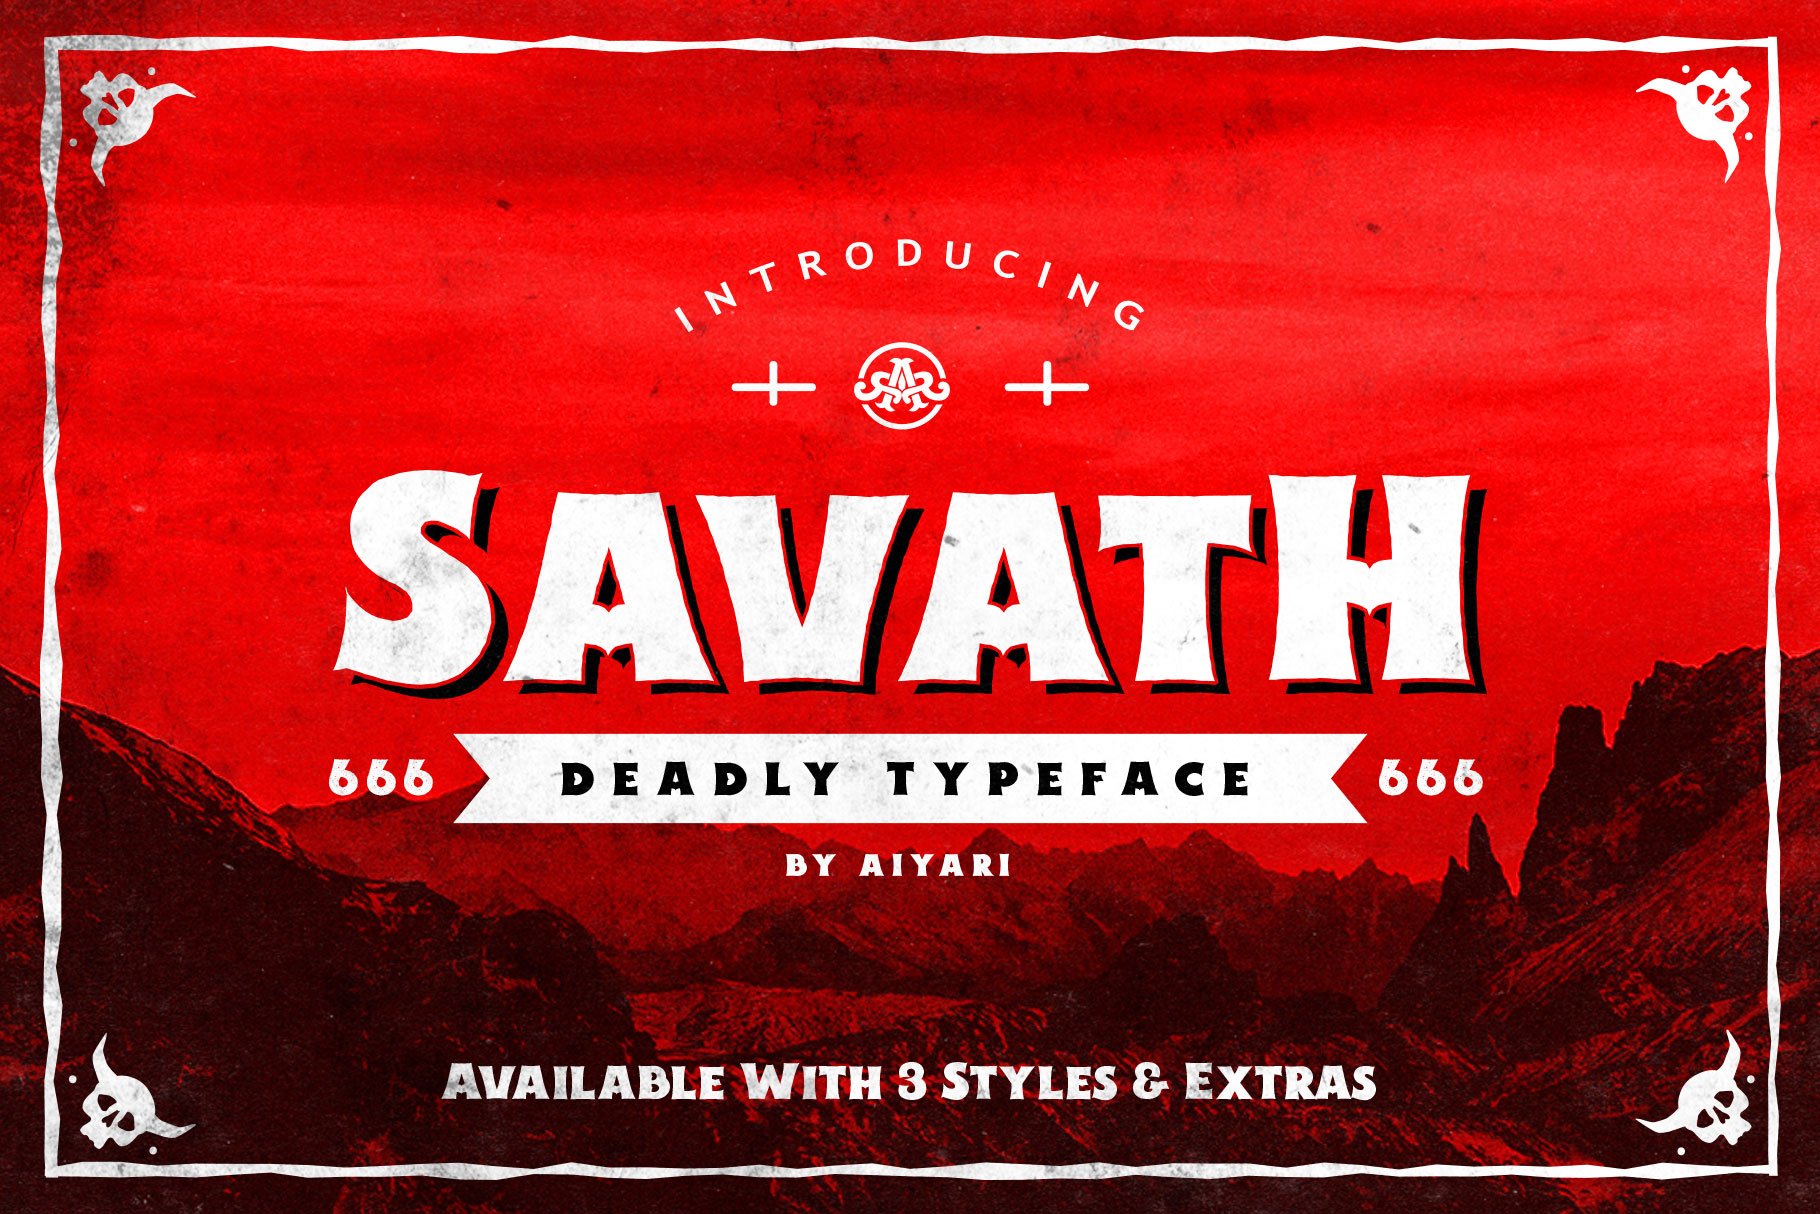 Savath + Extras cover image.